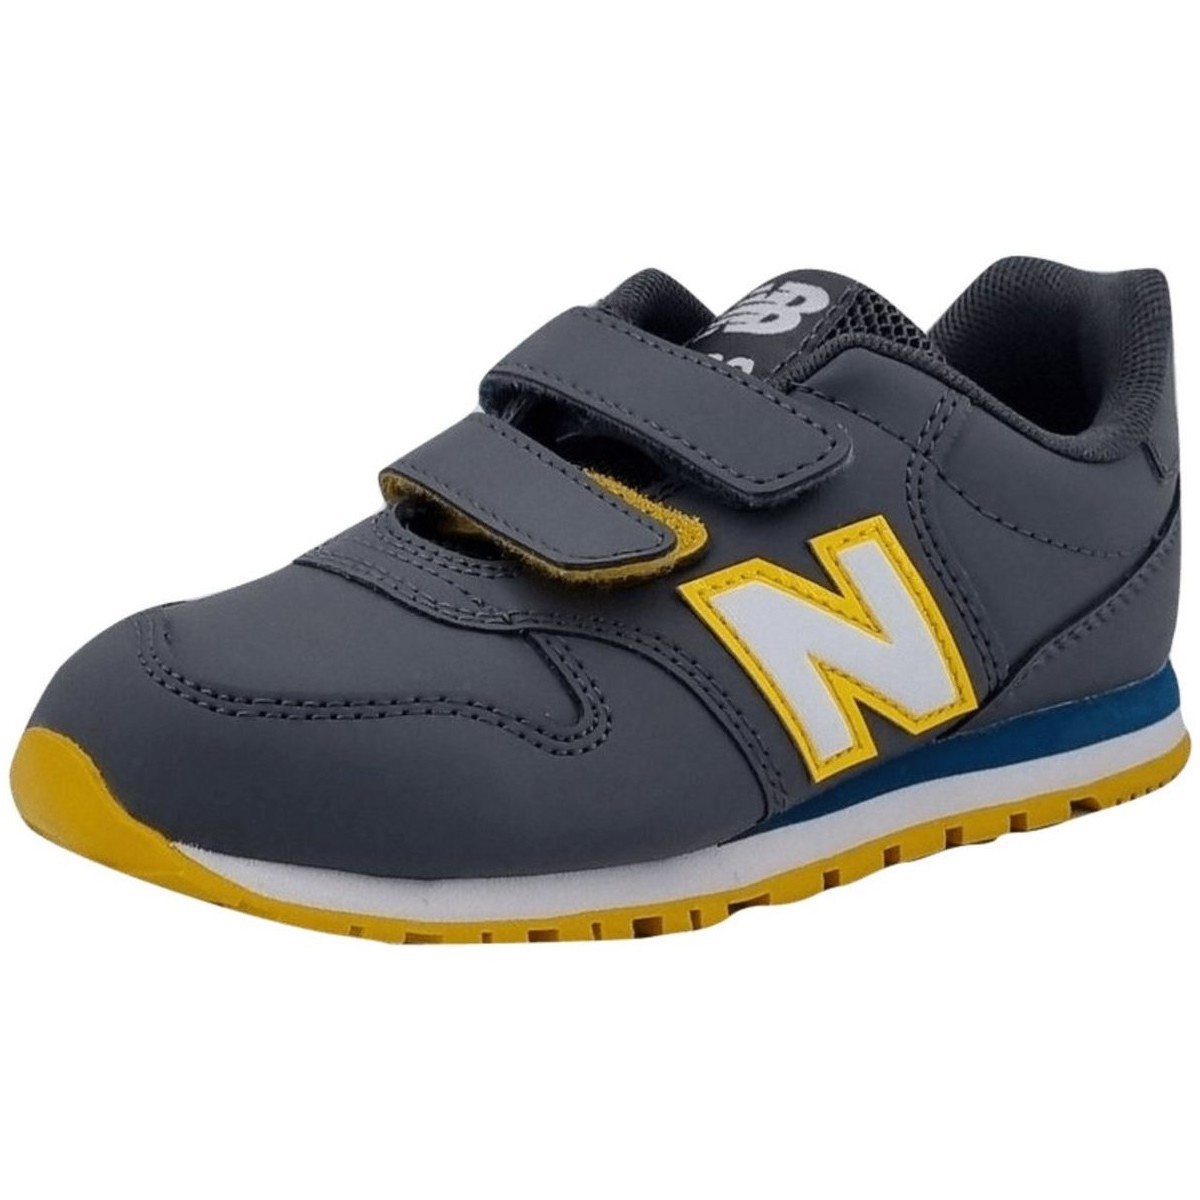 Schuhe Jungen Babyschuhe New Balance Low YV500 813860-40-122 Grau